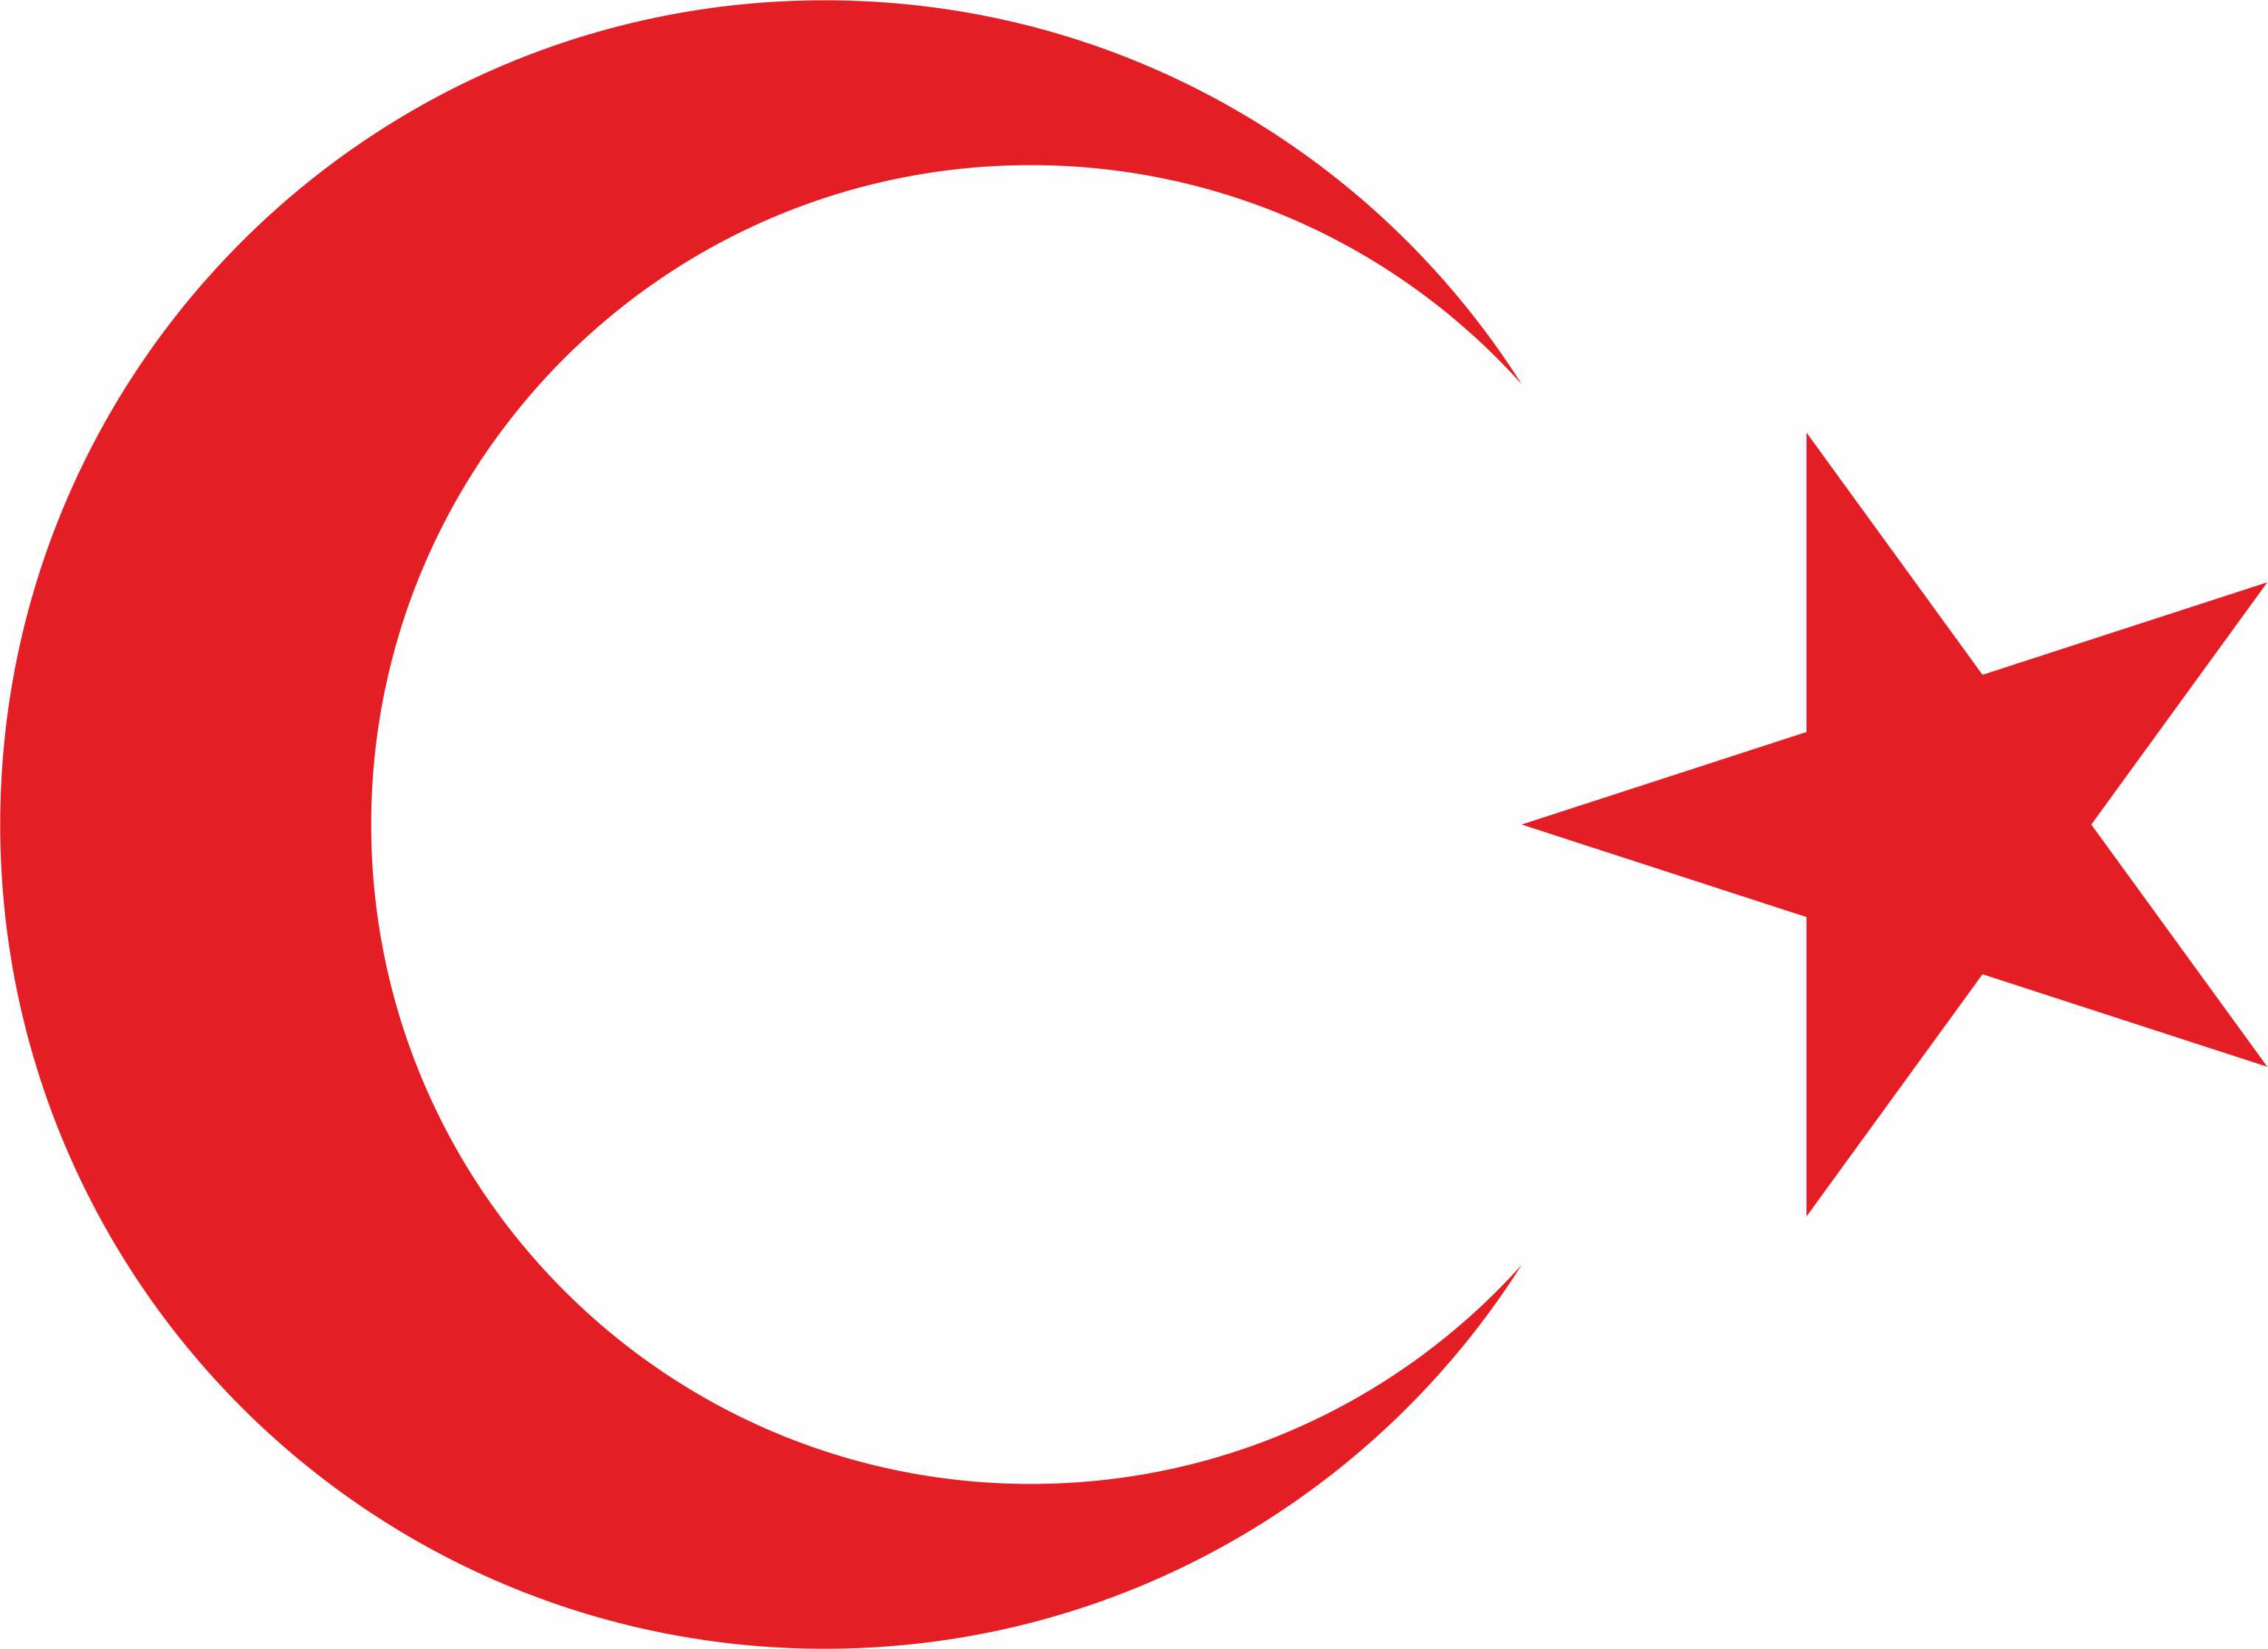 Ay Yıldız Sticker Türk Bayrağı Sticker (394290097)